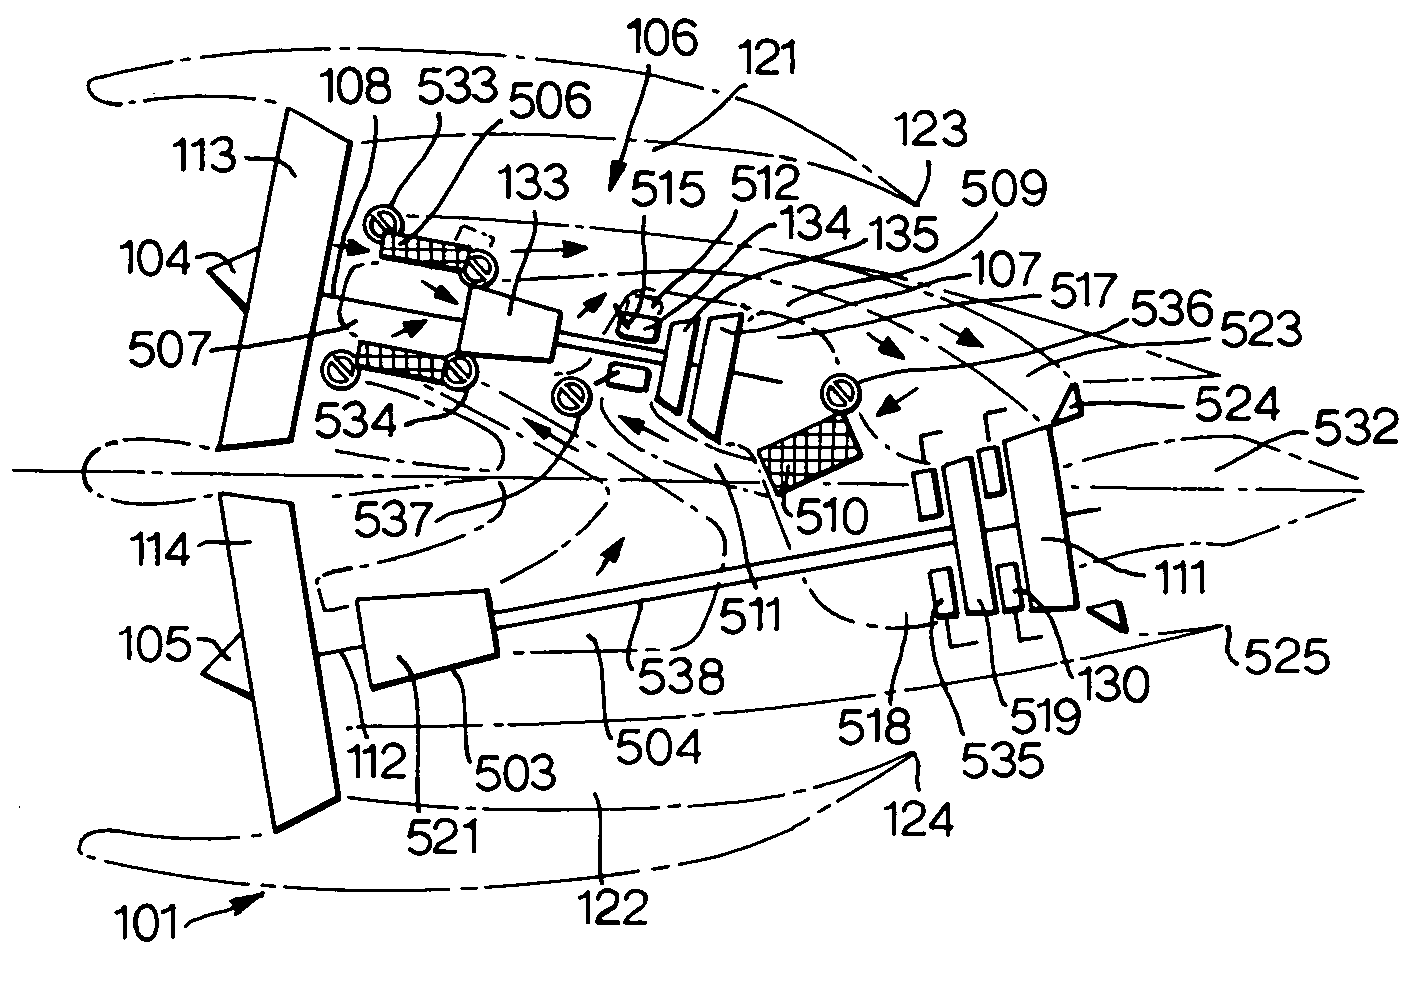 Turbofan arrangement